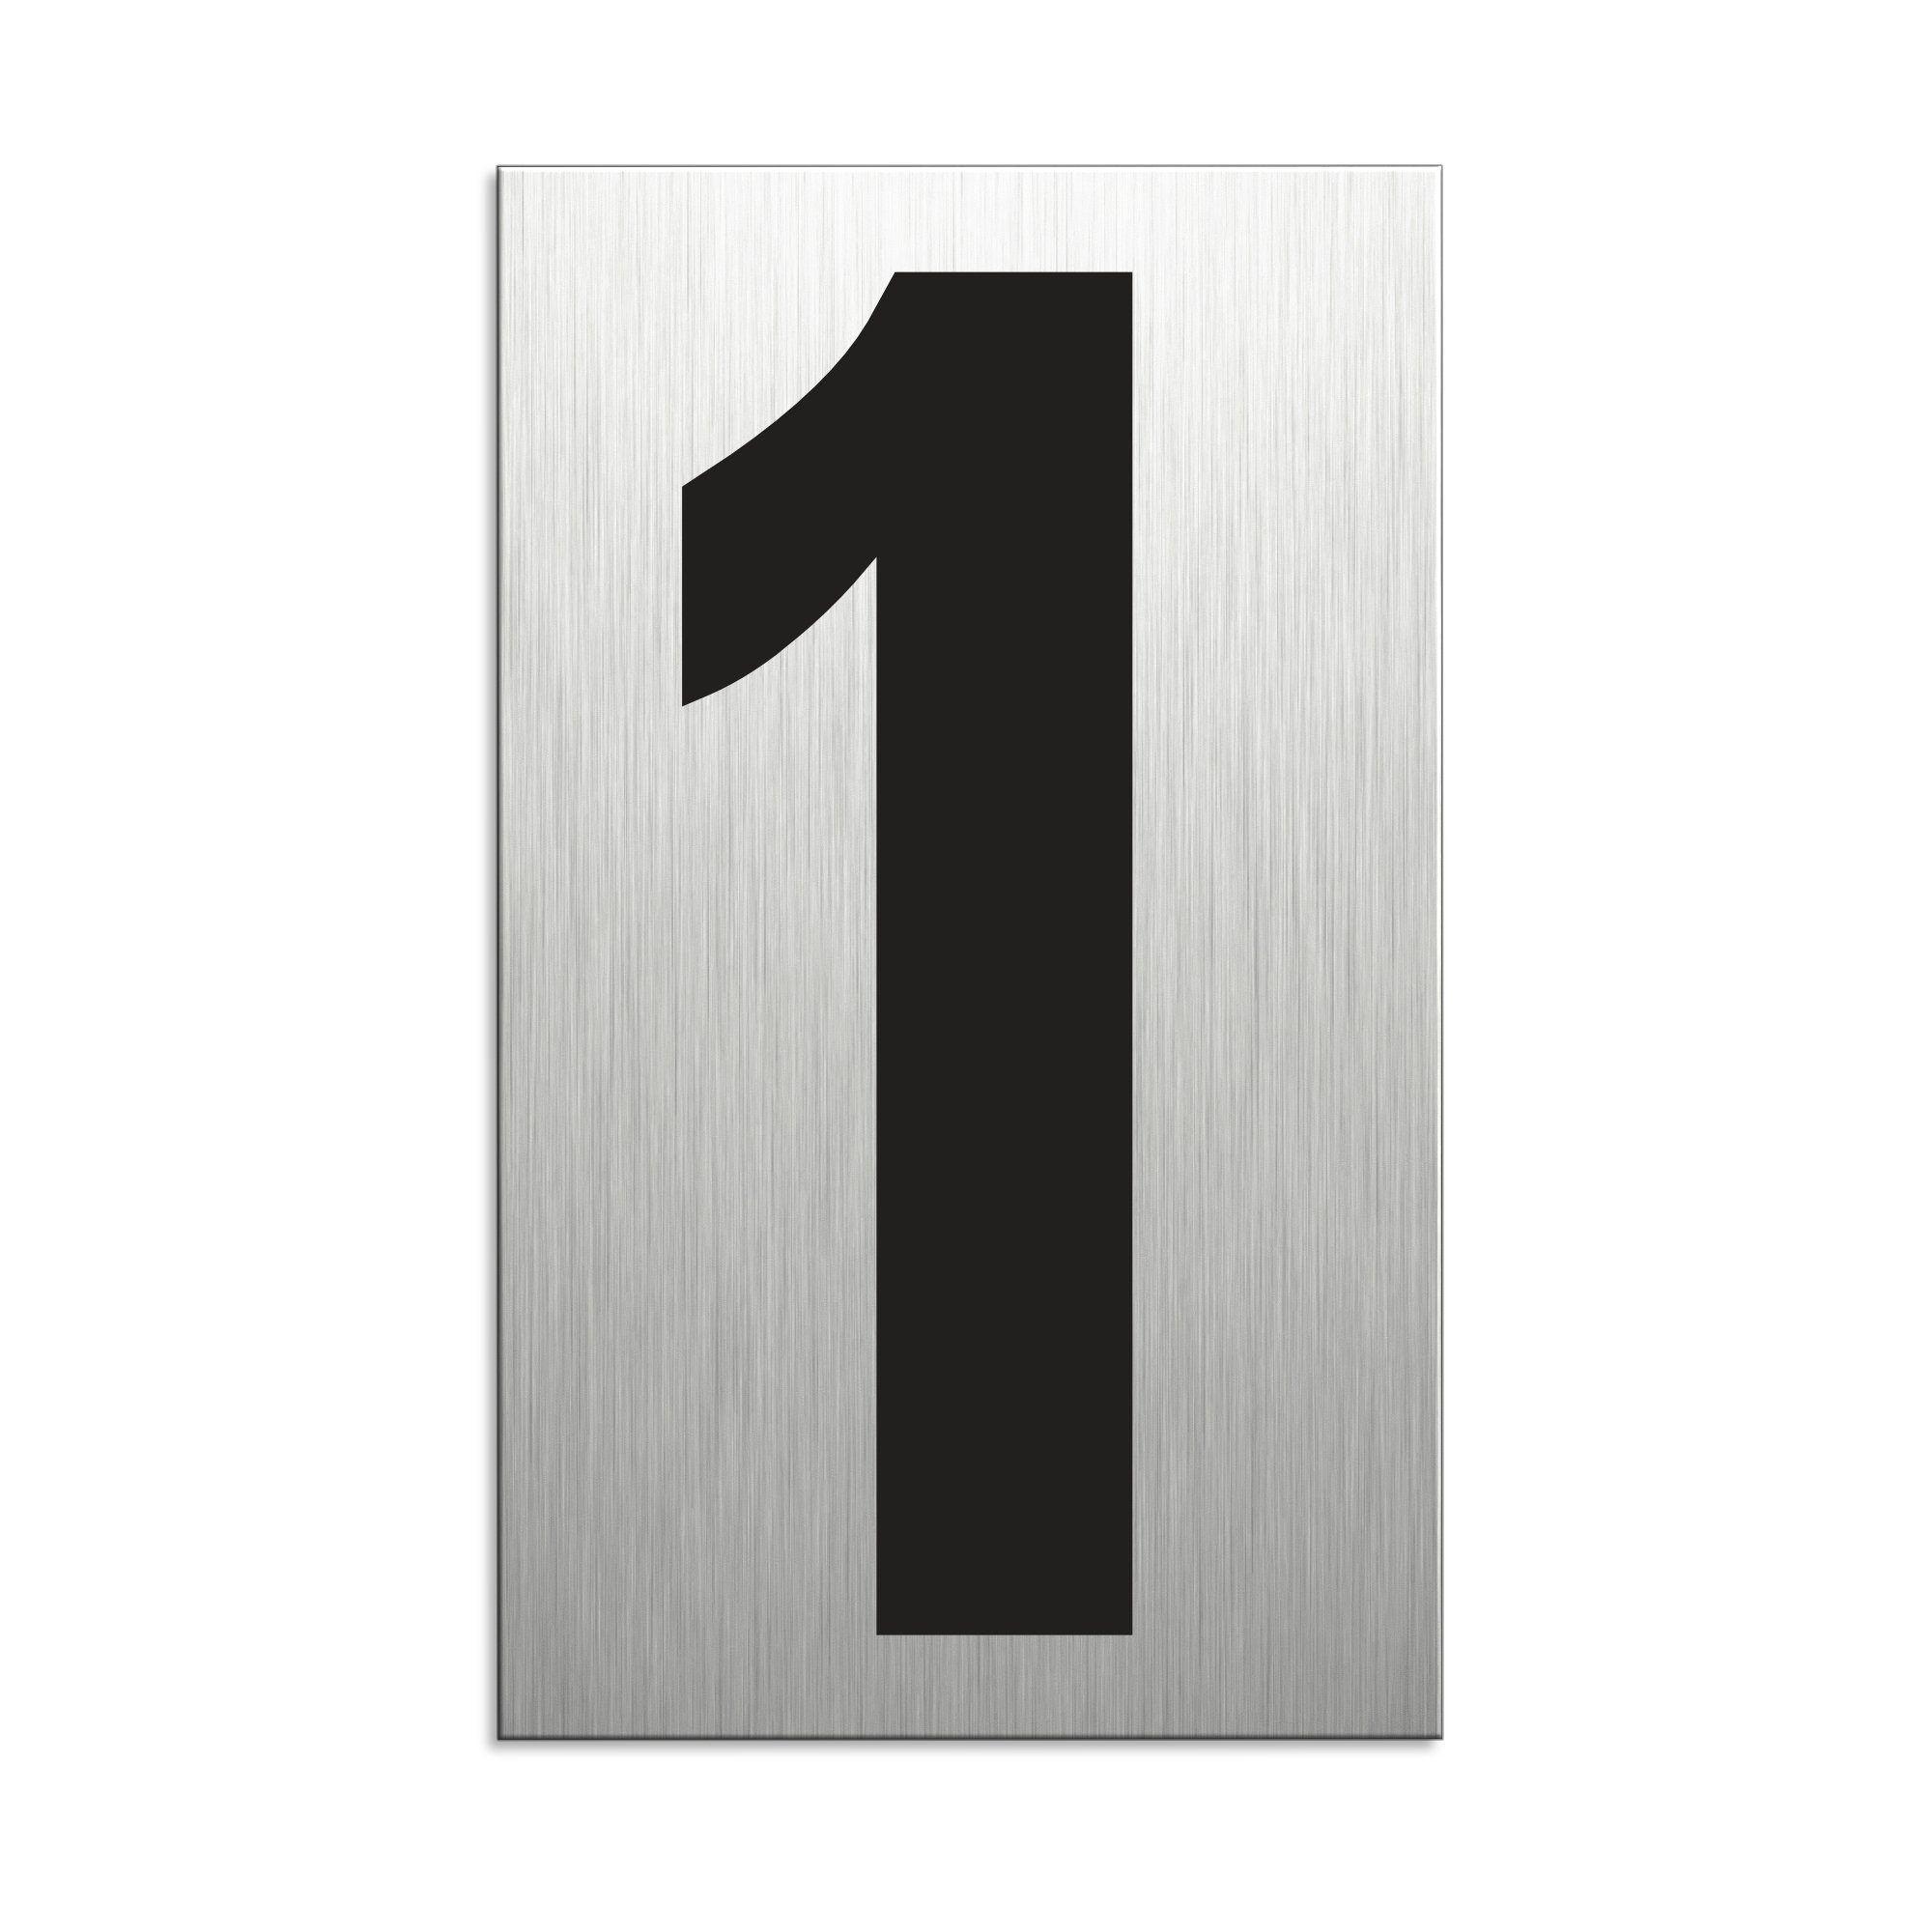 OFFORM DESIGN Hinweisschild Zahl Nummer beliebig kominierbar Aluminium selbstklebend 100x60 mm